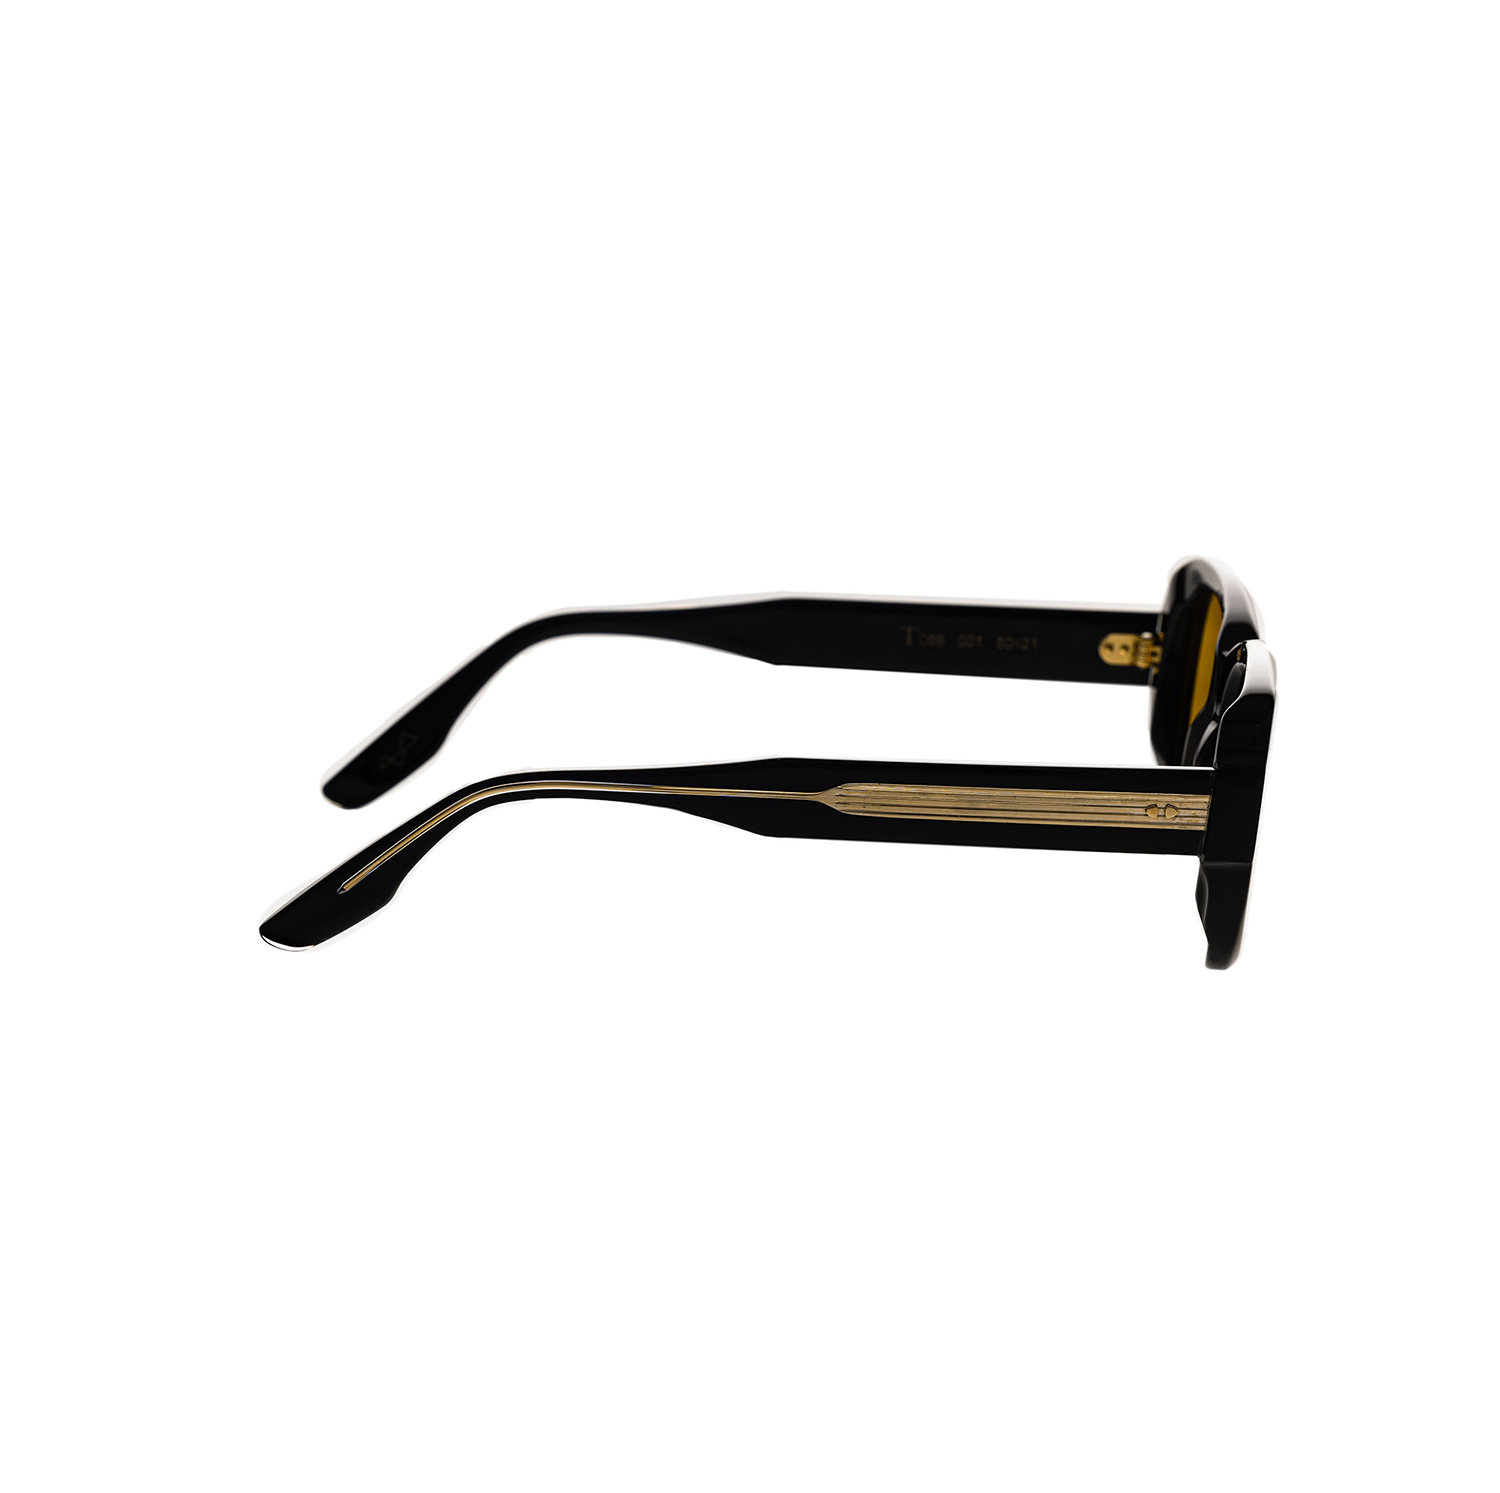 Costantino Toffoli Glasses Model T086